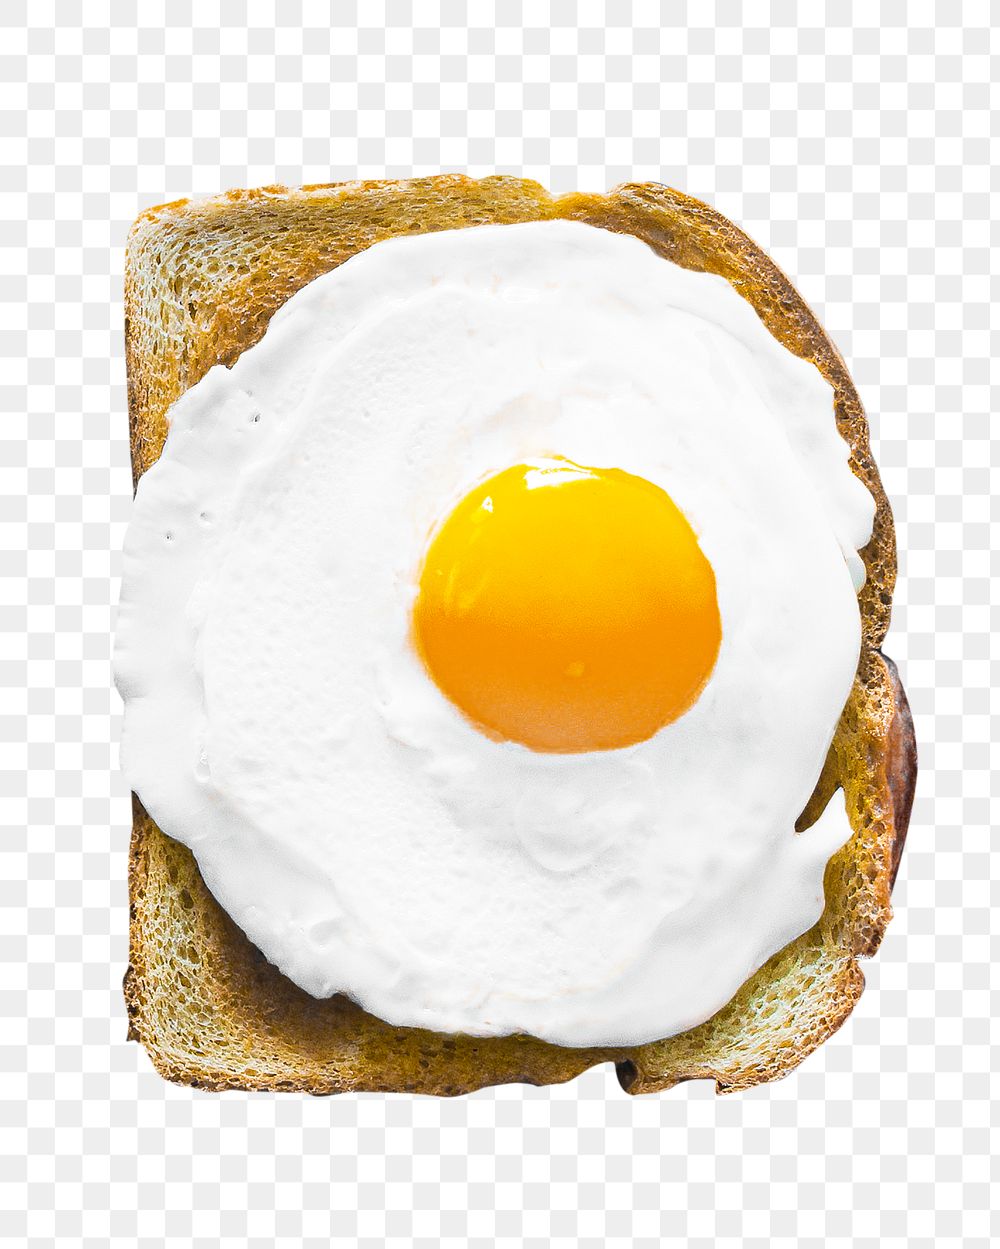 Egg on toast breakfast png collage element, transparent background